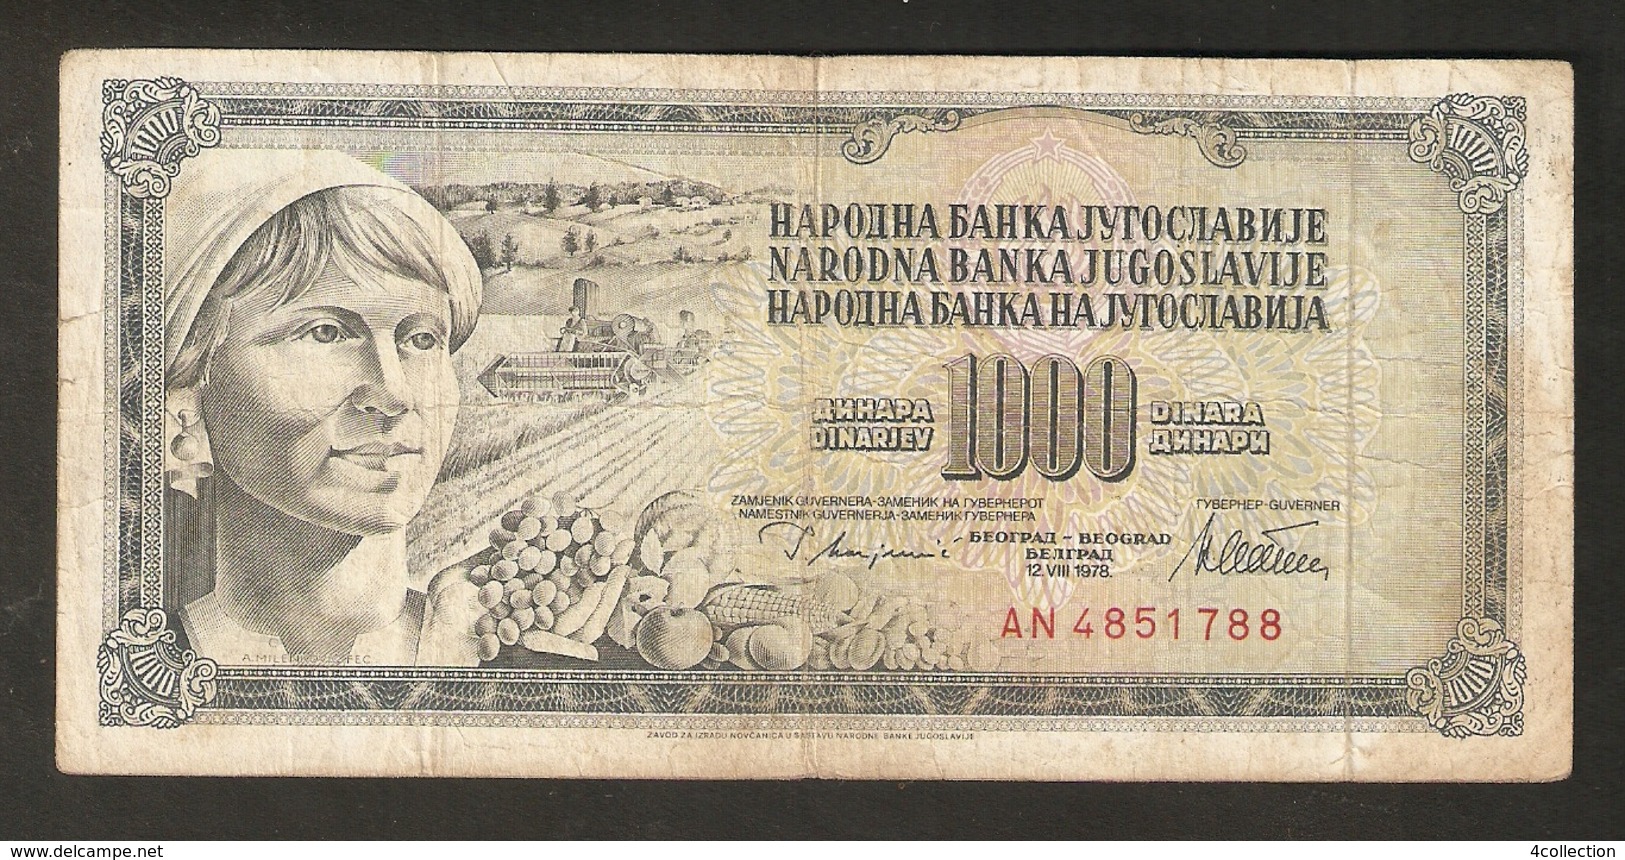 T. Yugoslavia Jugoslavije 1000 Dinara Dinarjev Beograd 12 VIII 1978 # AN 4851788 - Yougoslavie